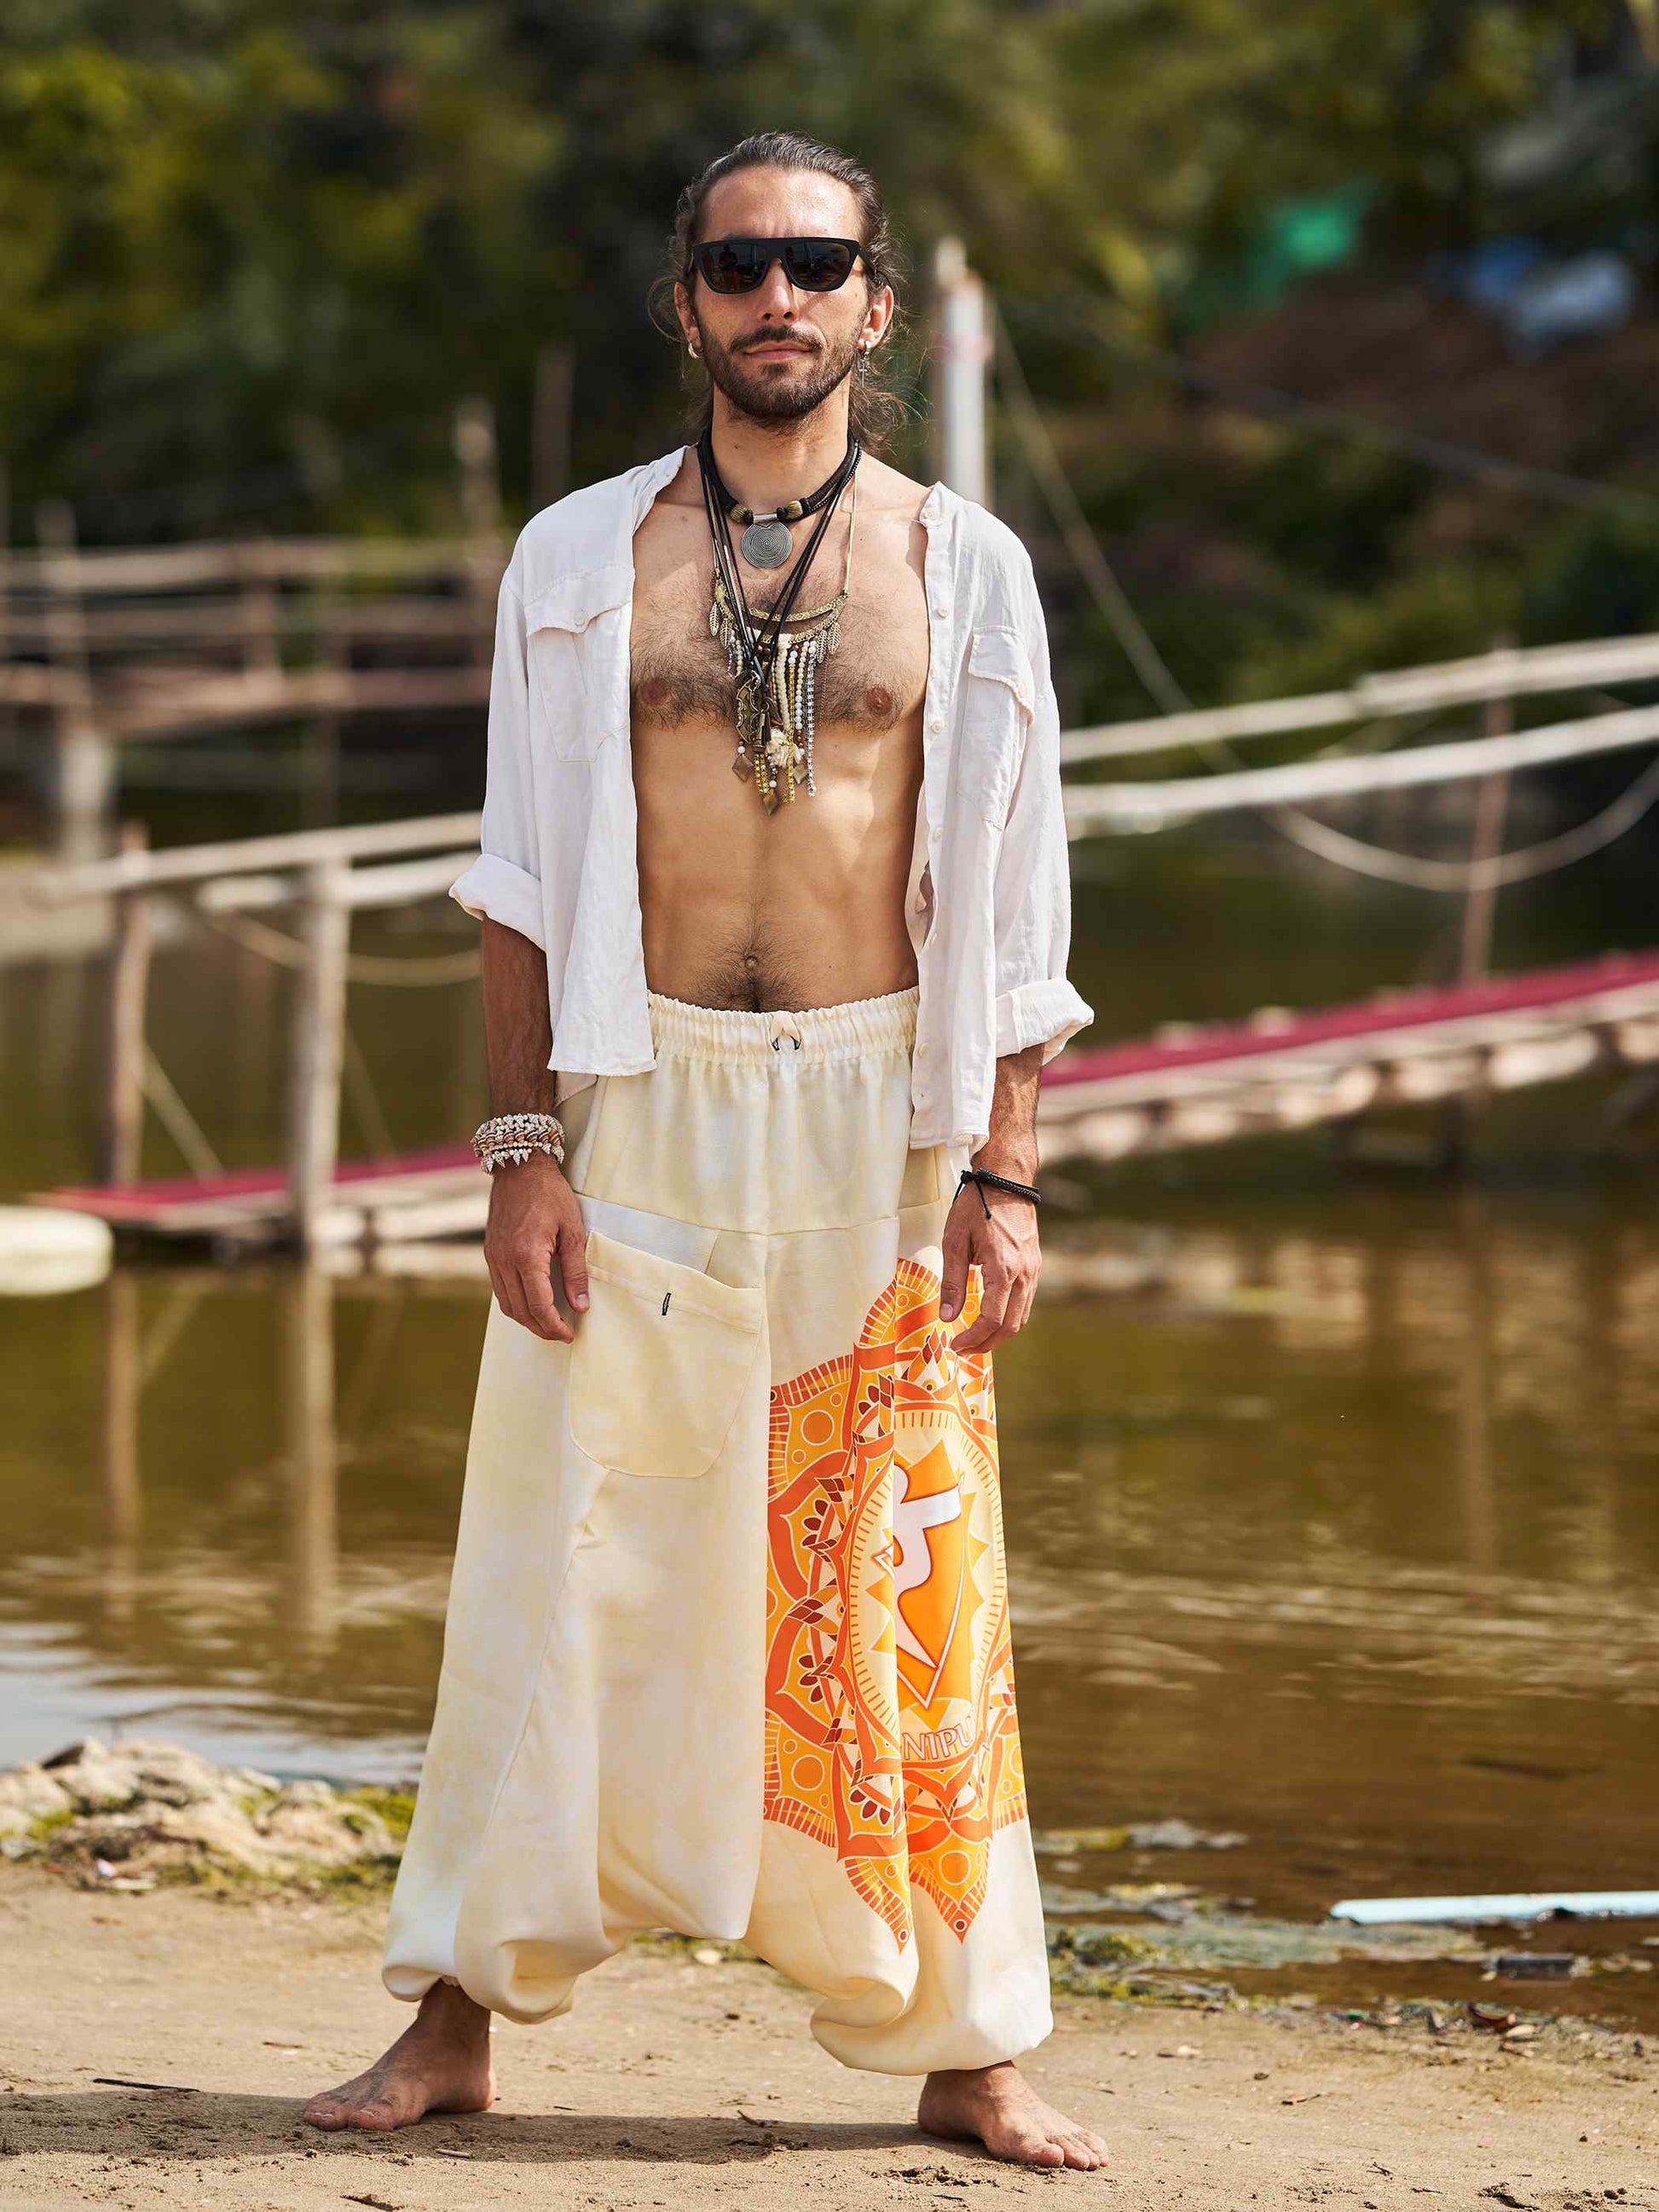 Buy Men's Mandala Print Dhoti Balloon Unisex Harem Pants For Travel Yoga Dance